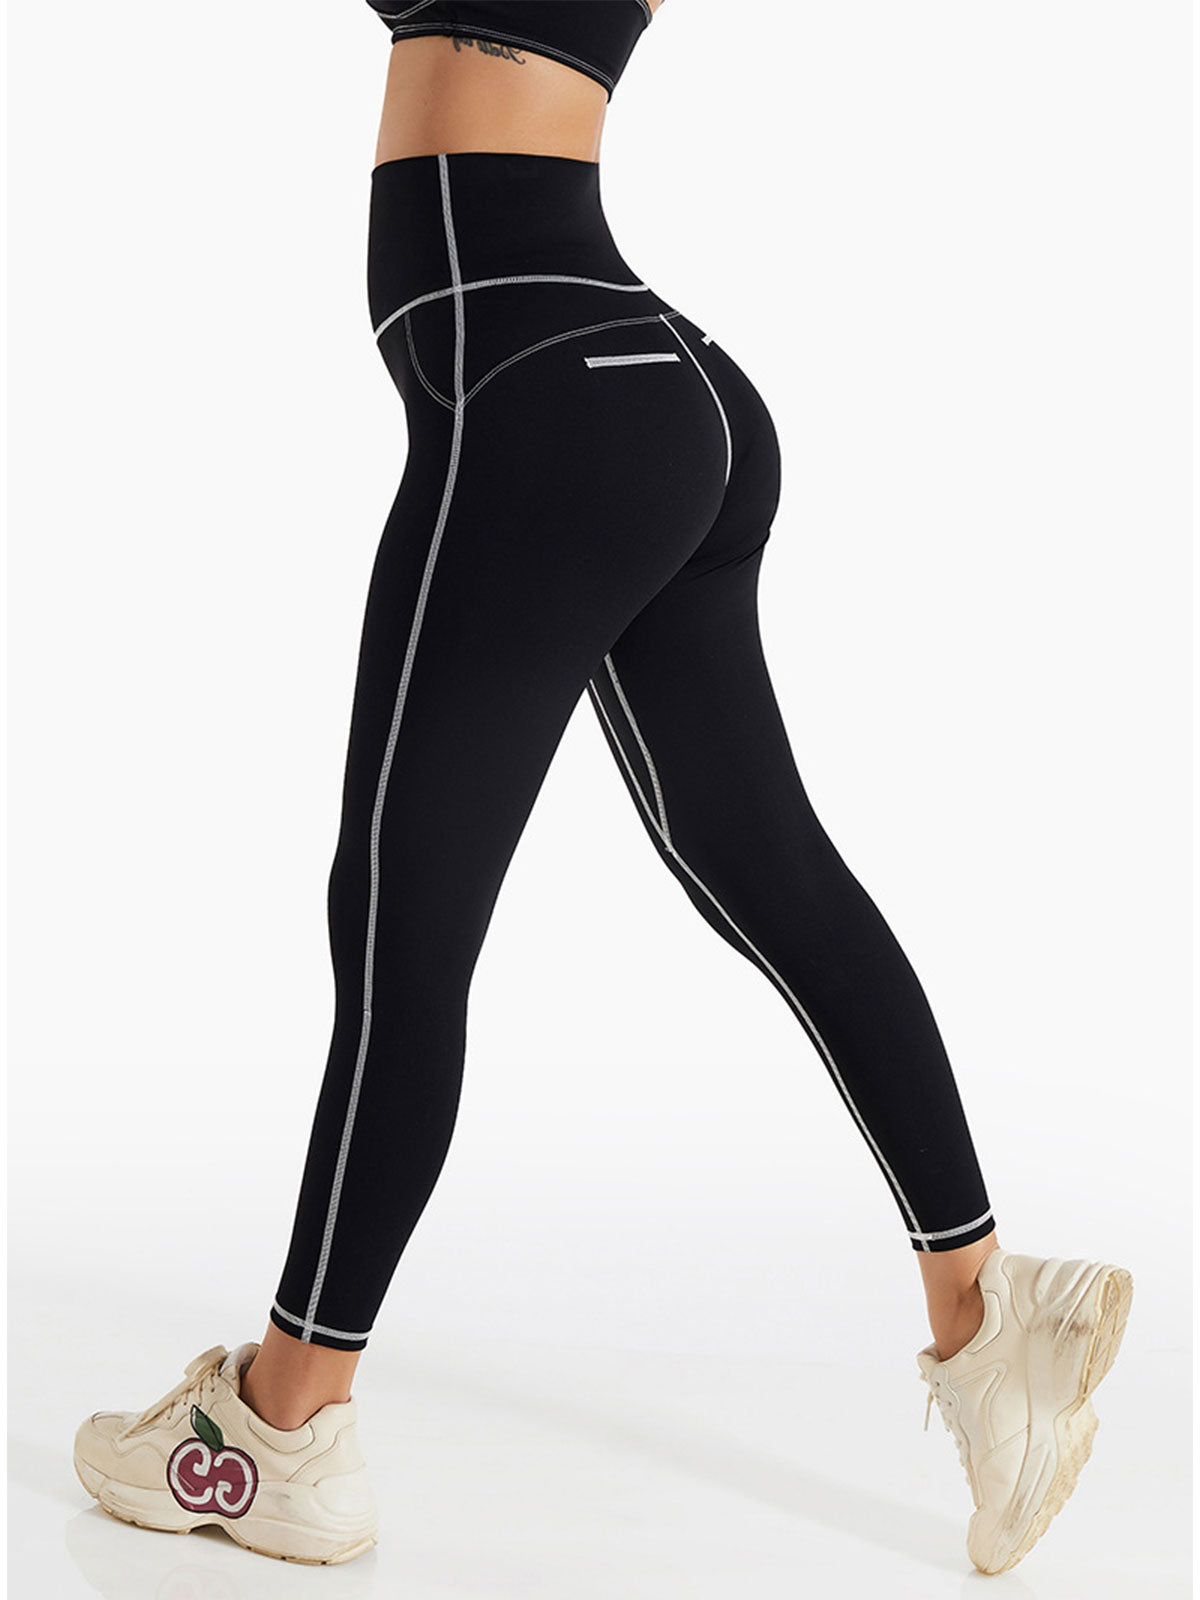 Women's casual high waist yoga pants hip lift fitness pants belly tight sports leggings